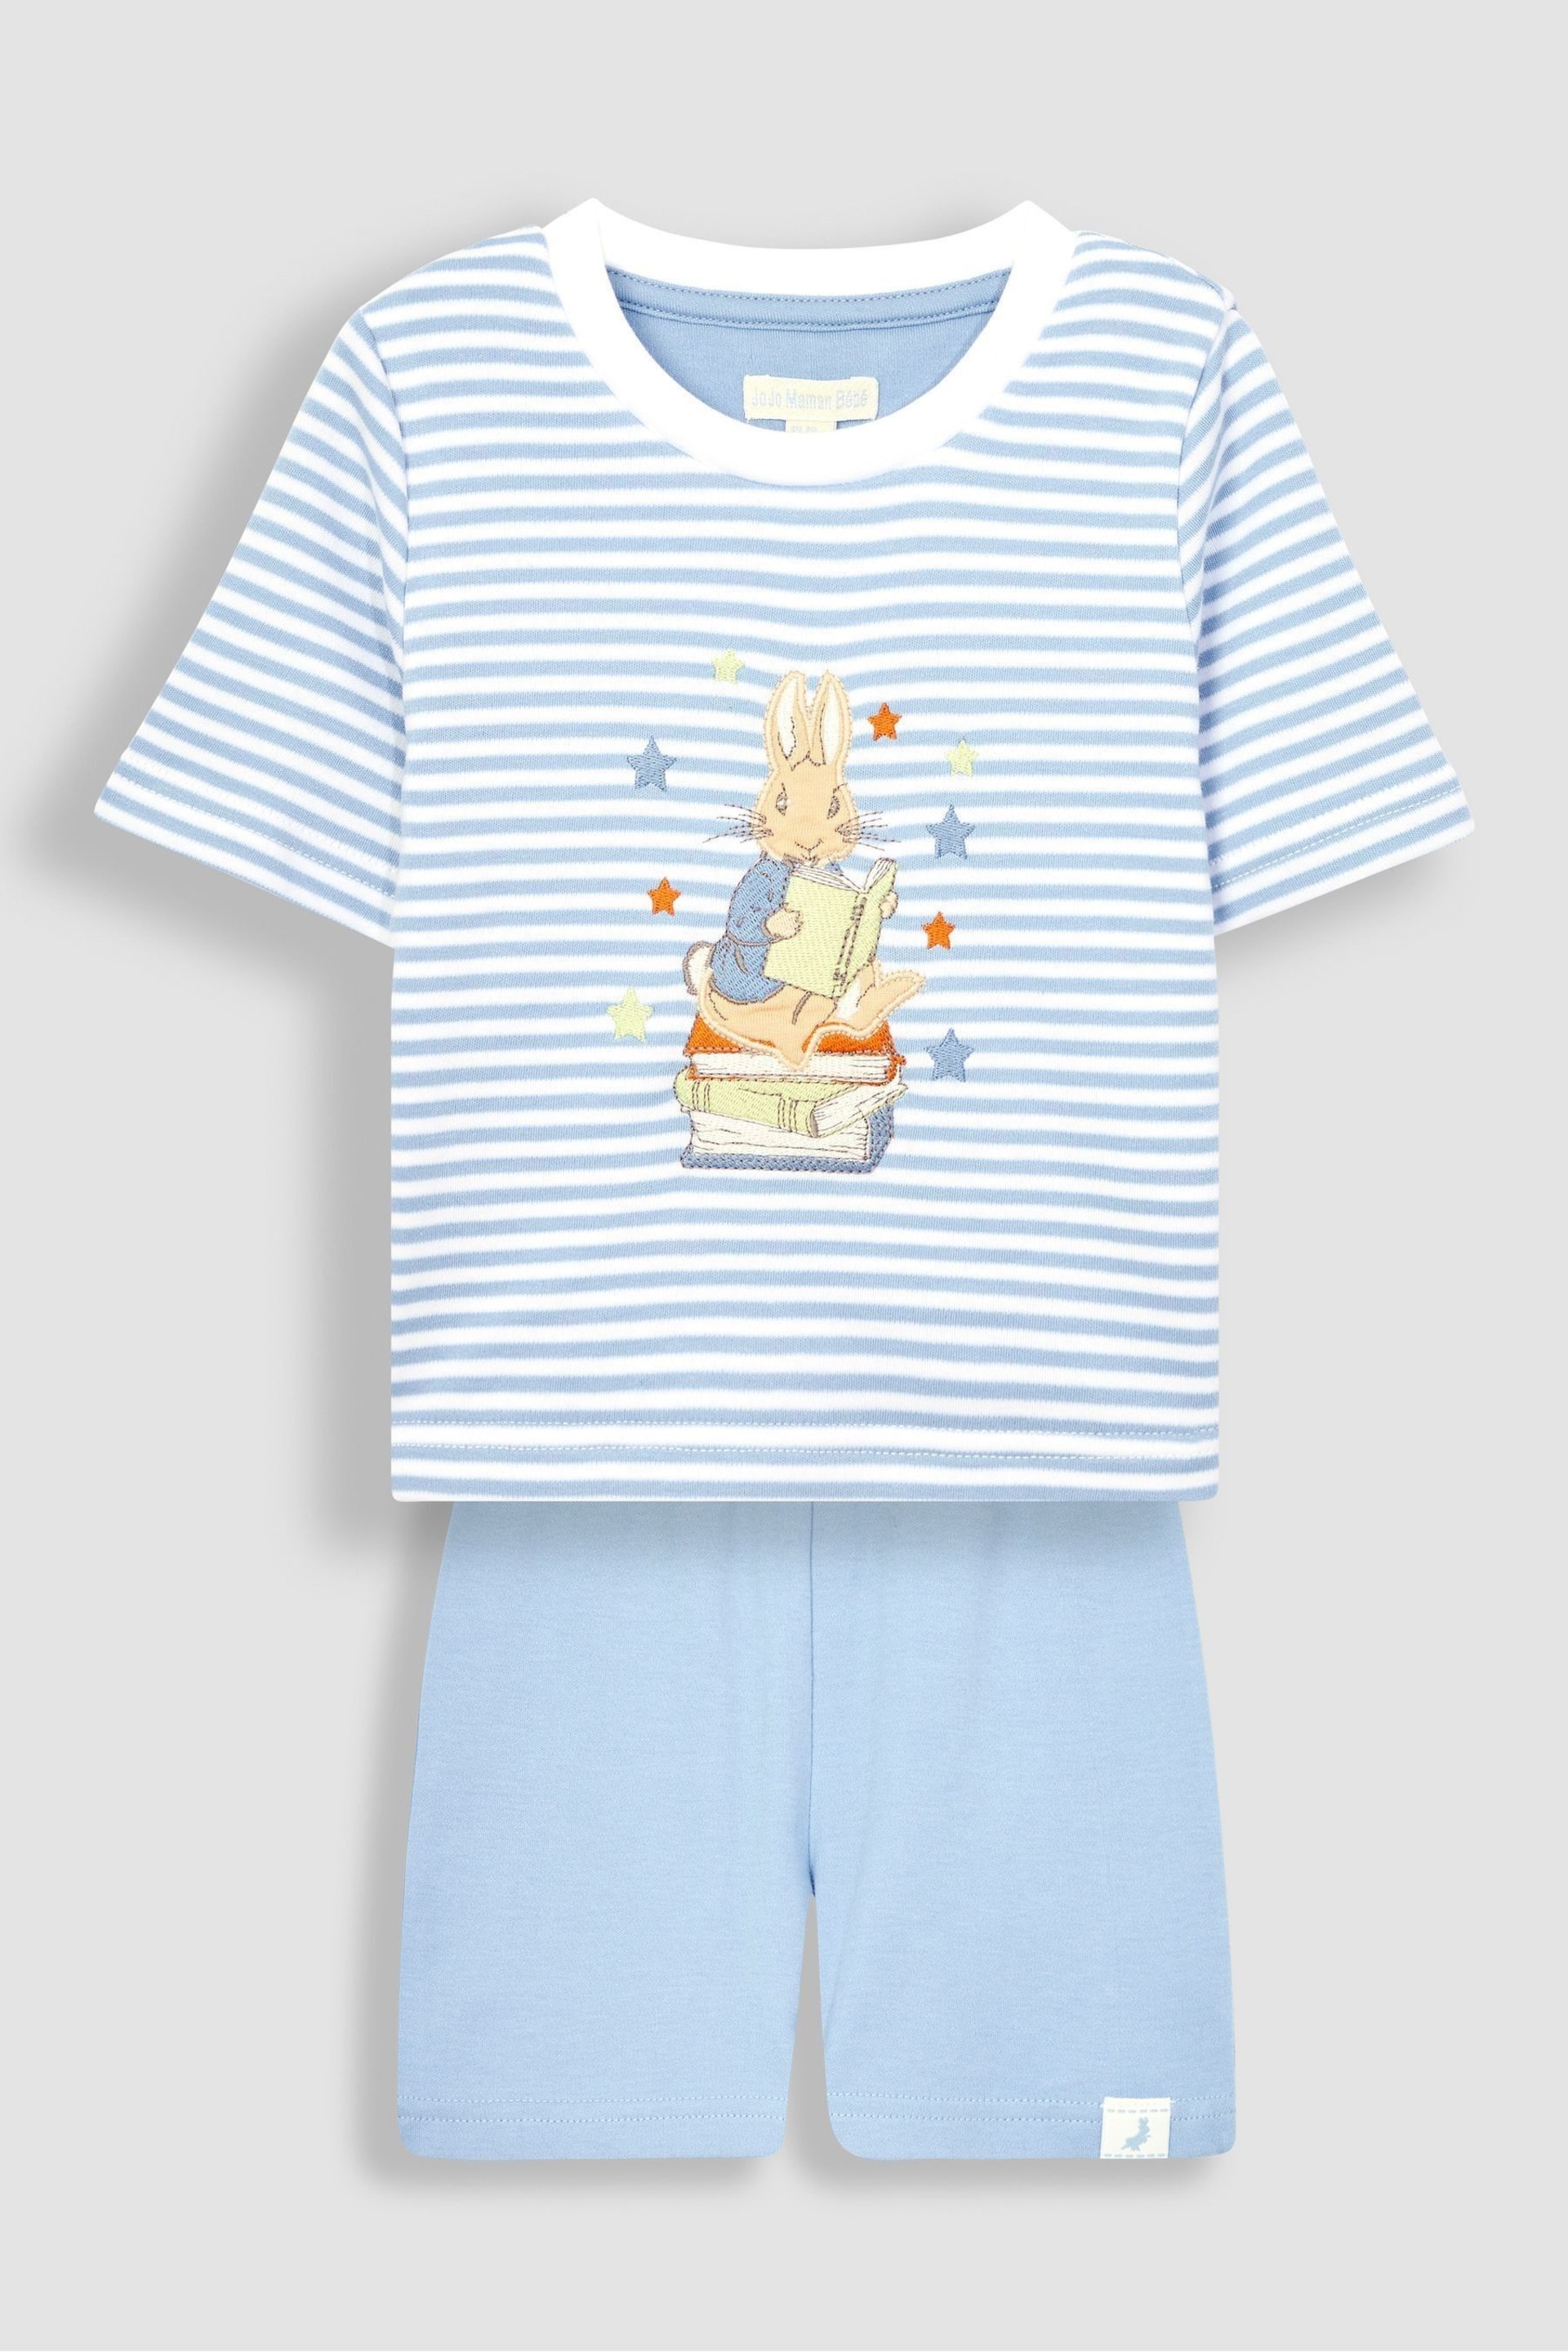 JoJo Maman Bébé Blue Peter Rabbit Jersey Pyjamas - Image 6 of 6